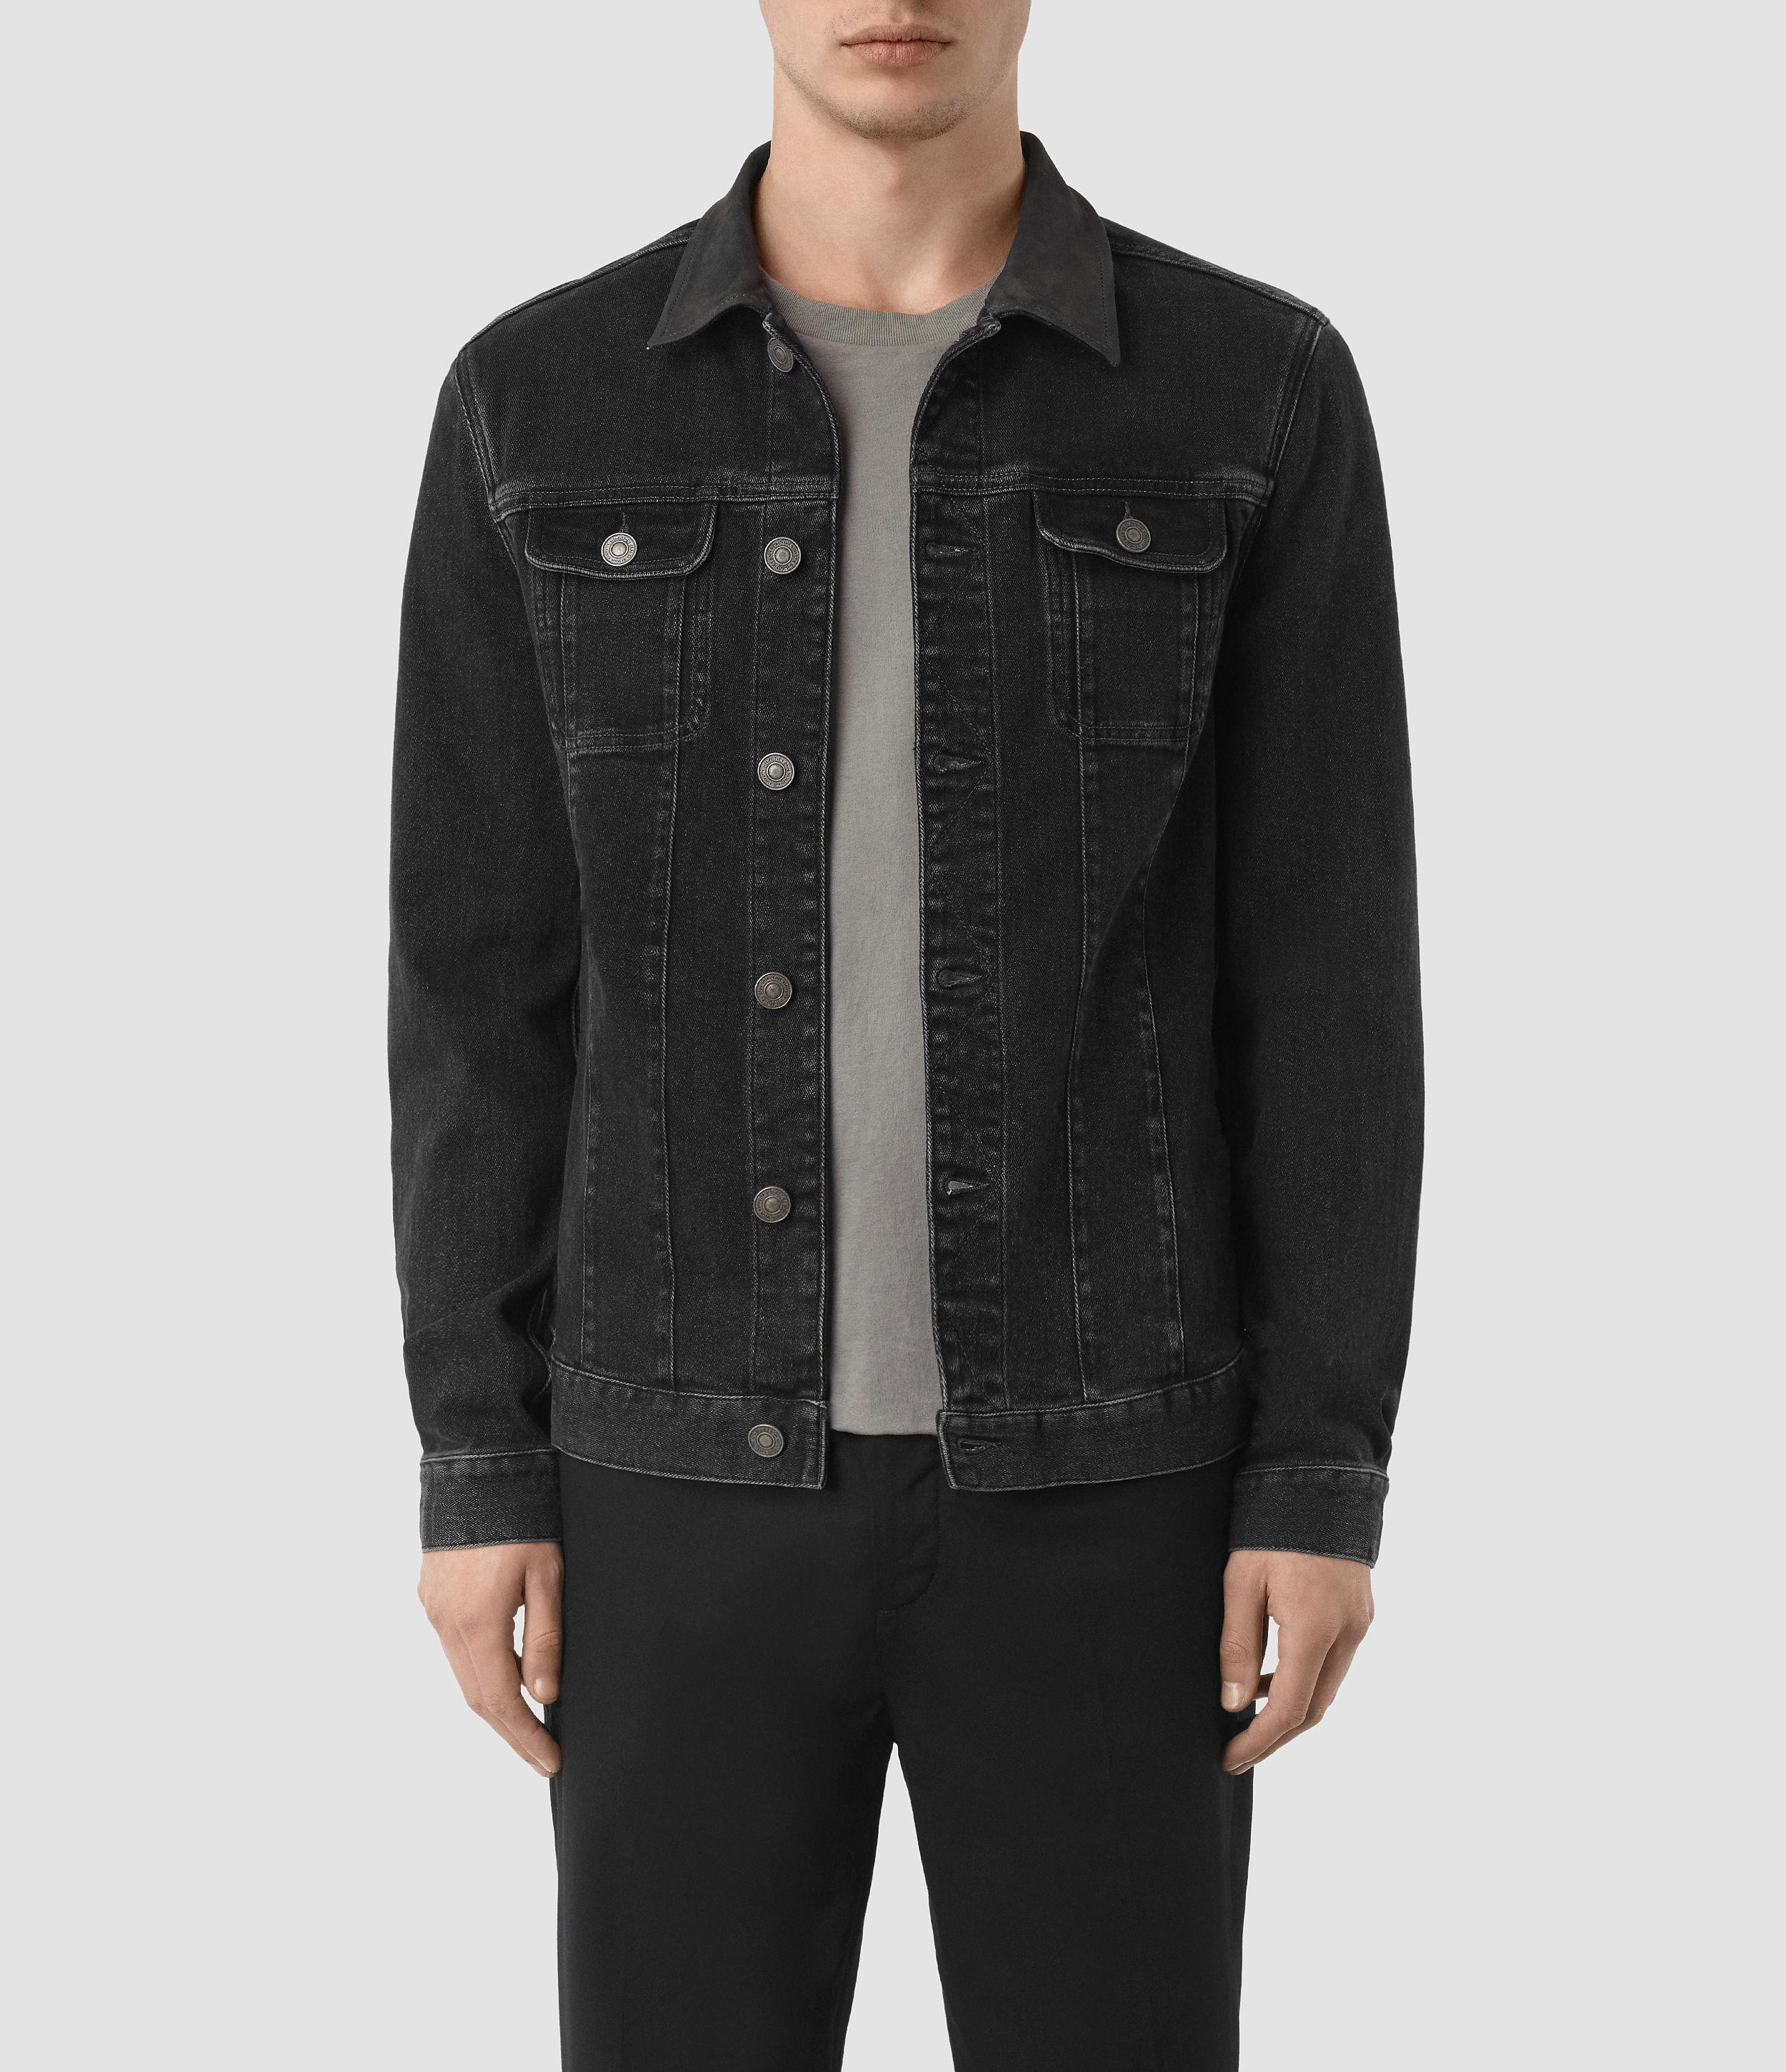 AllSaints Leith Denim Jacket in Graphite (Black) for Men - Lyst